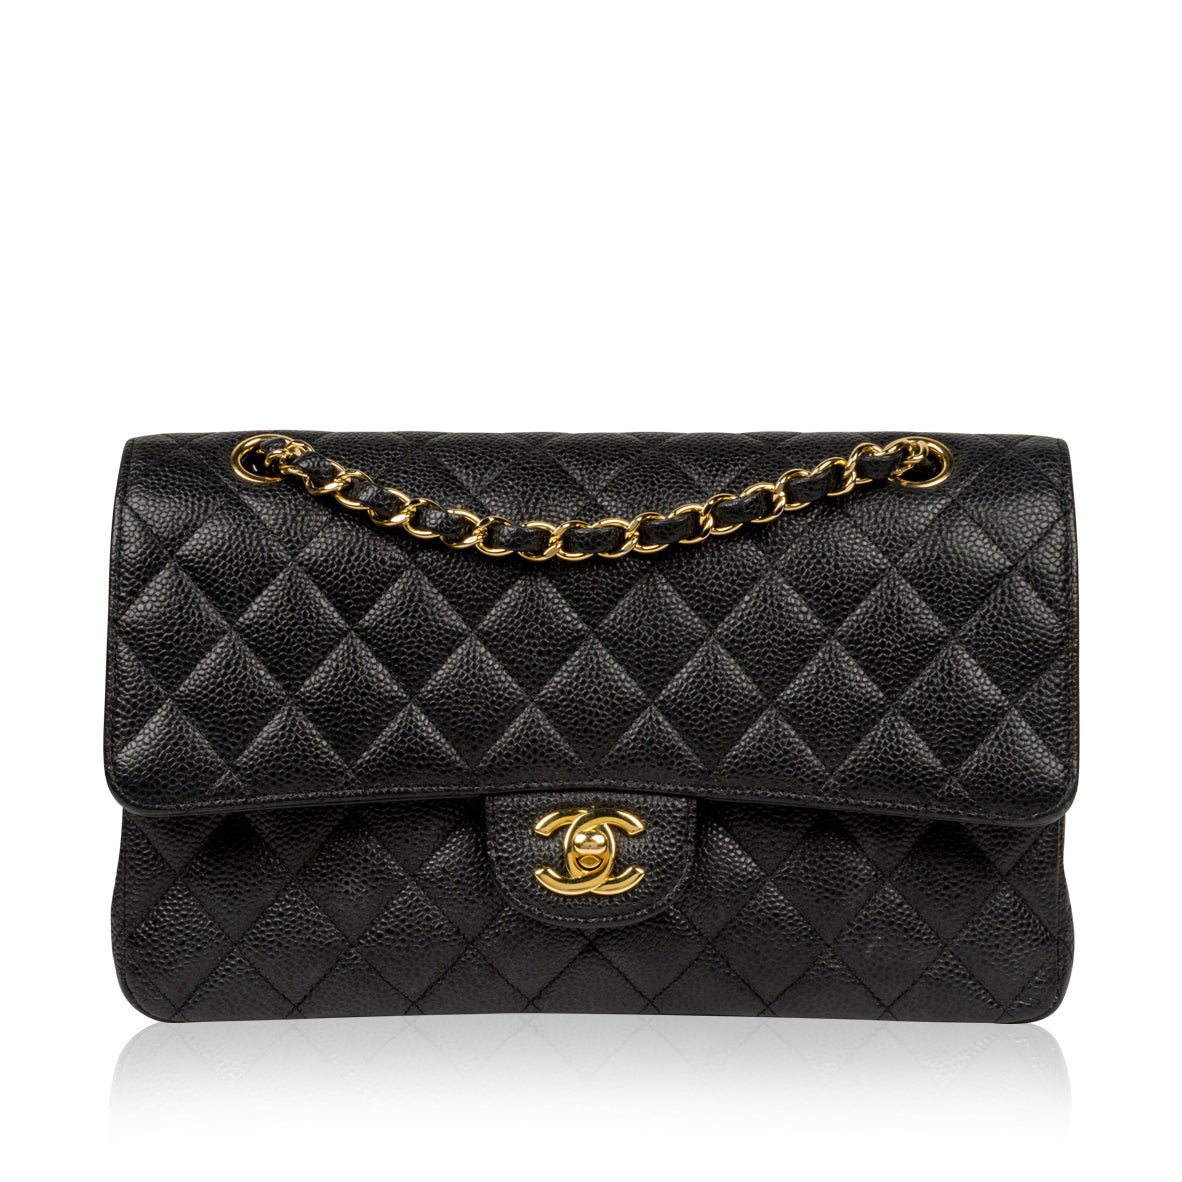 CHANEL  Bags  Chanel Jumbo Ivorygrey Ombr Stripe Bag Limited Edition Price  Firm  Poshmark